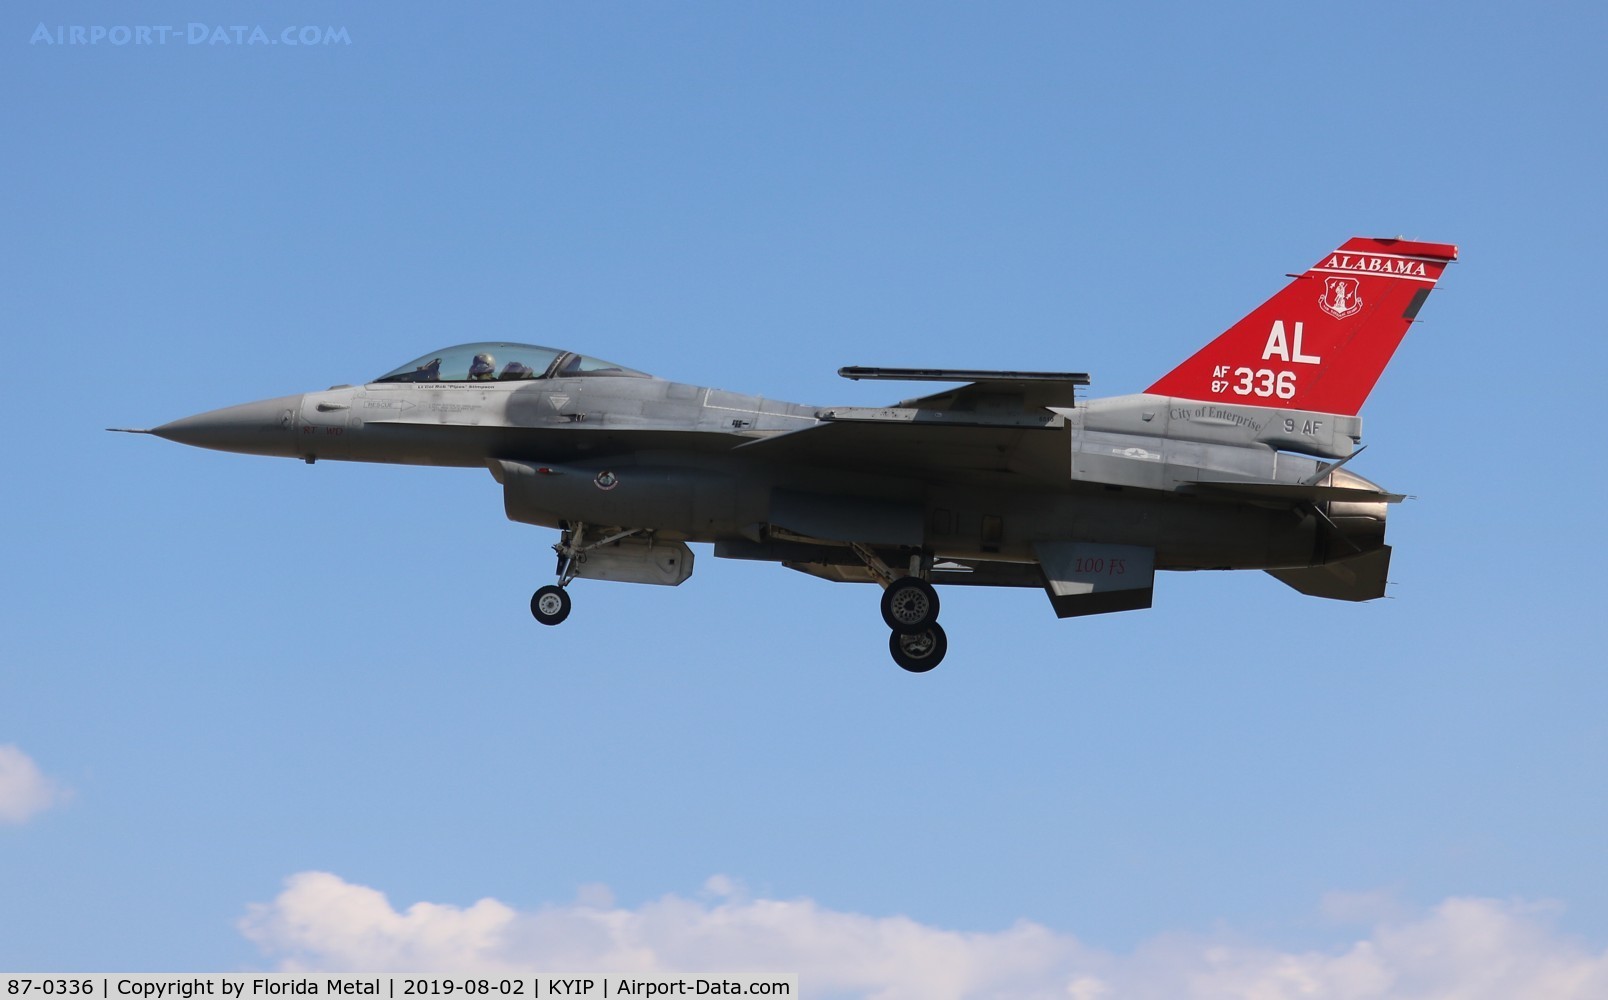 87-0336, 1987 General Dynamics F-16C Fighting Falcon C/N 5C-597, F-16C